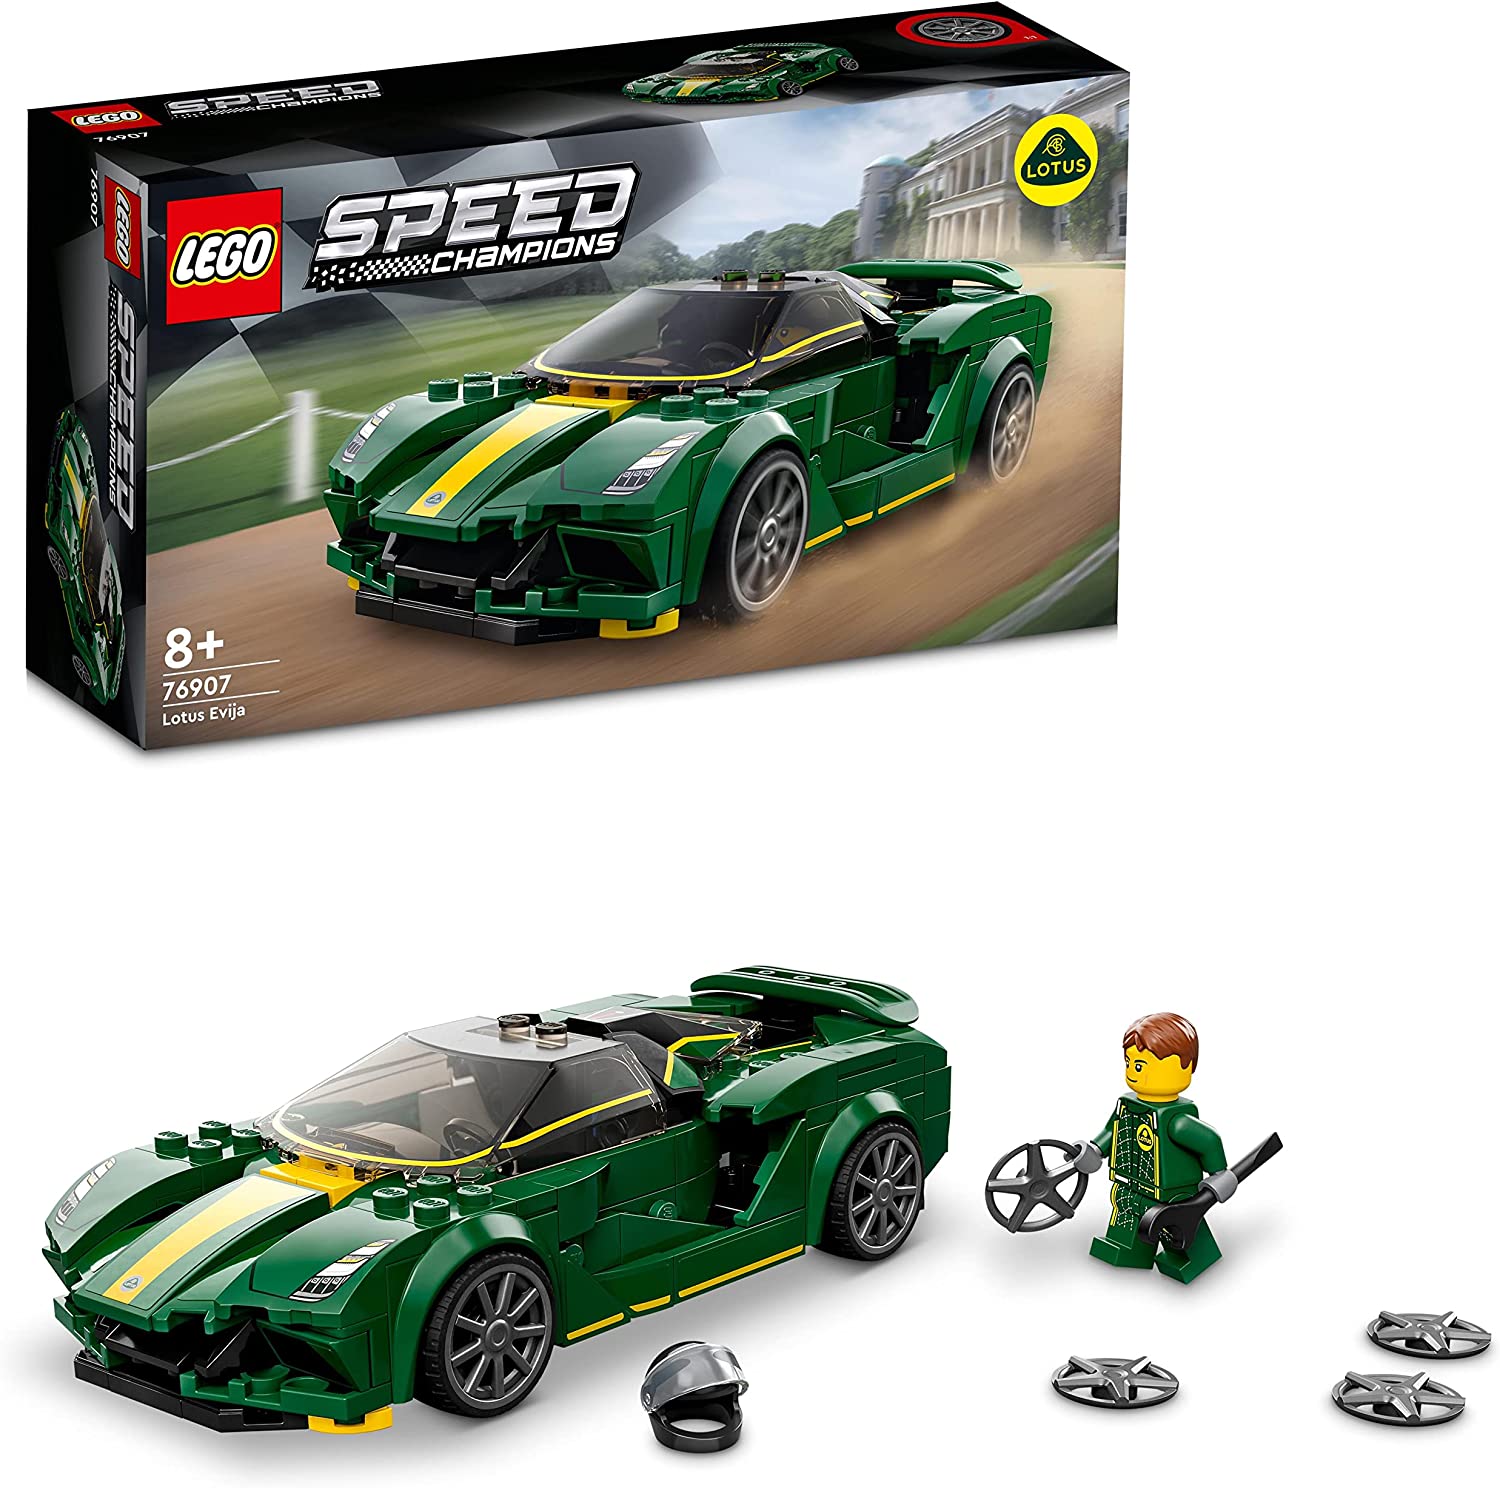 LEGO 76907 Speed Champions Lotus Evija Model Car Kit Toy Car Racing Car for